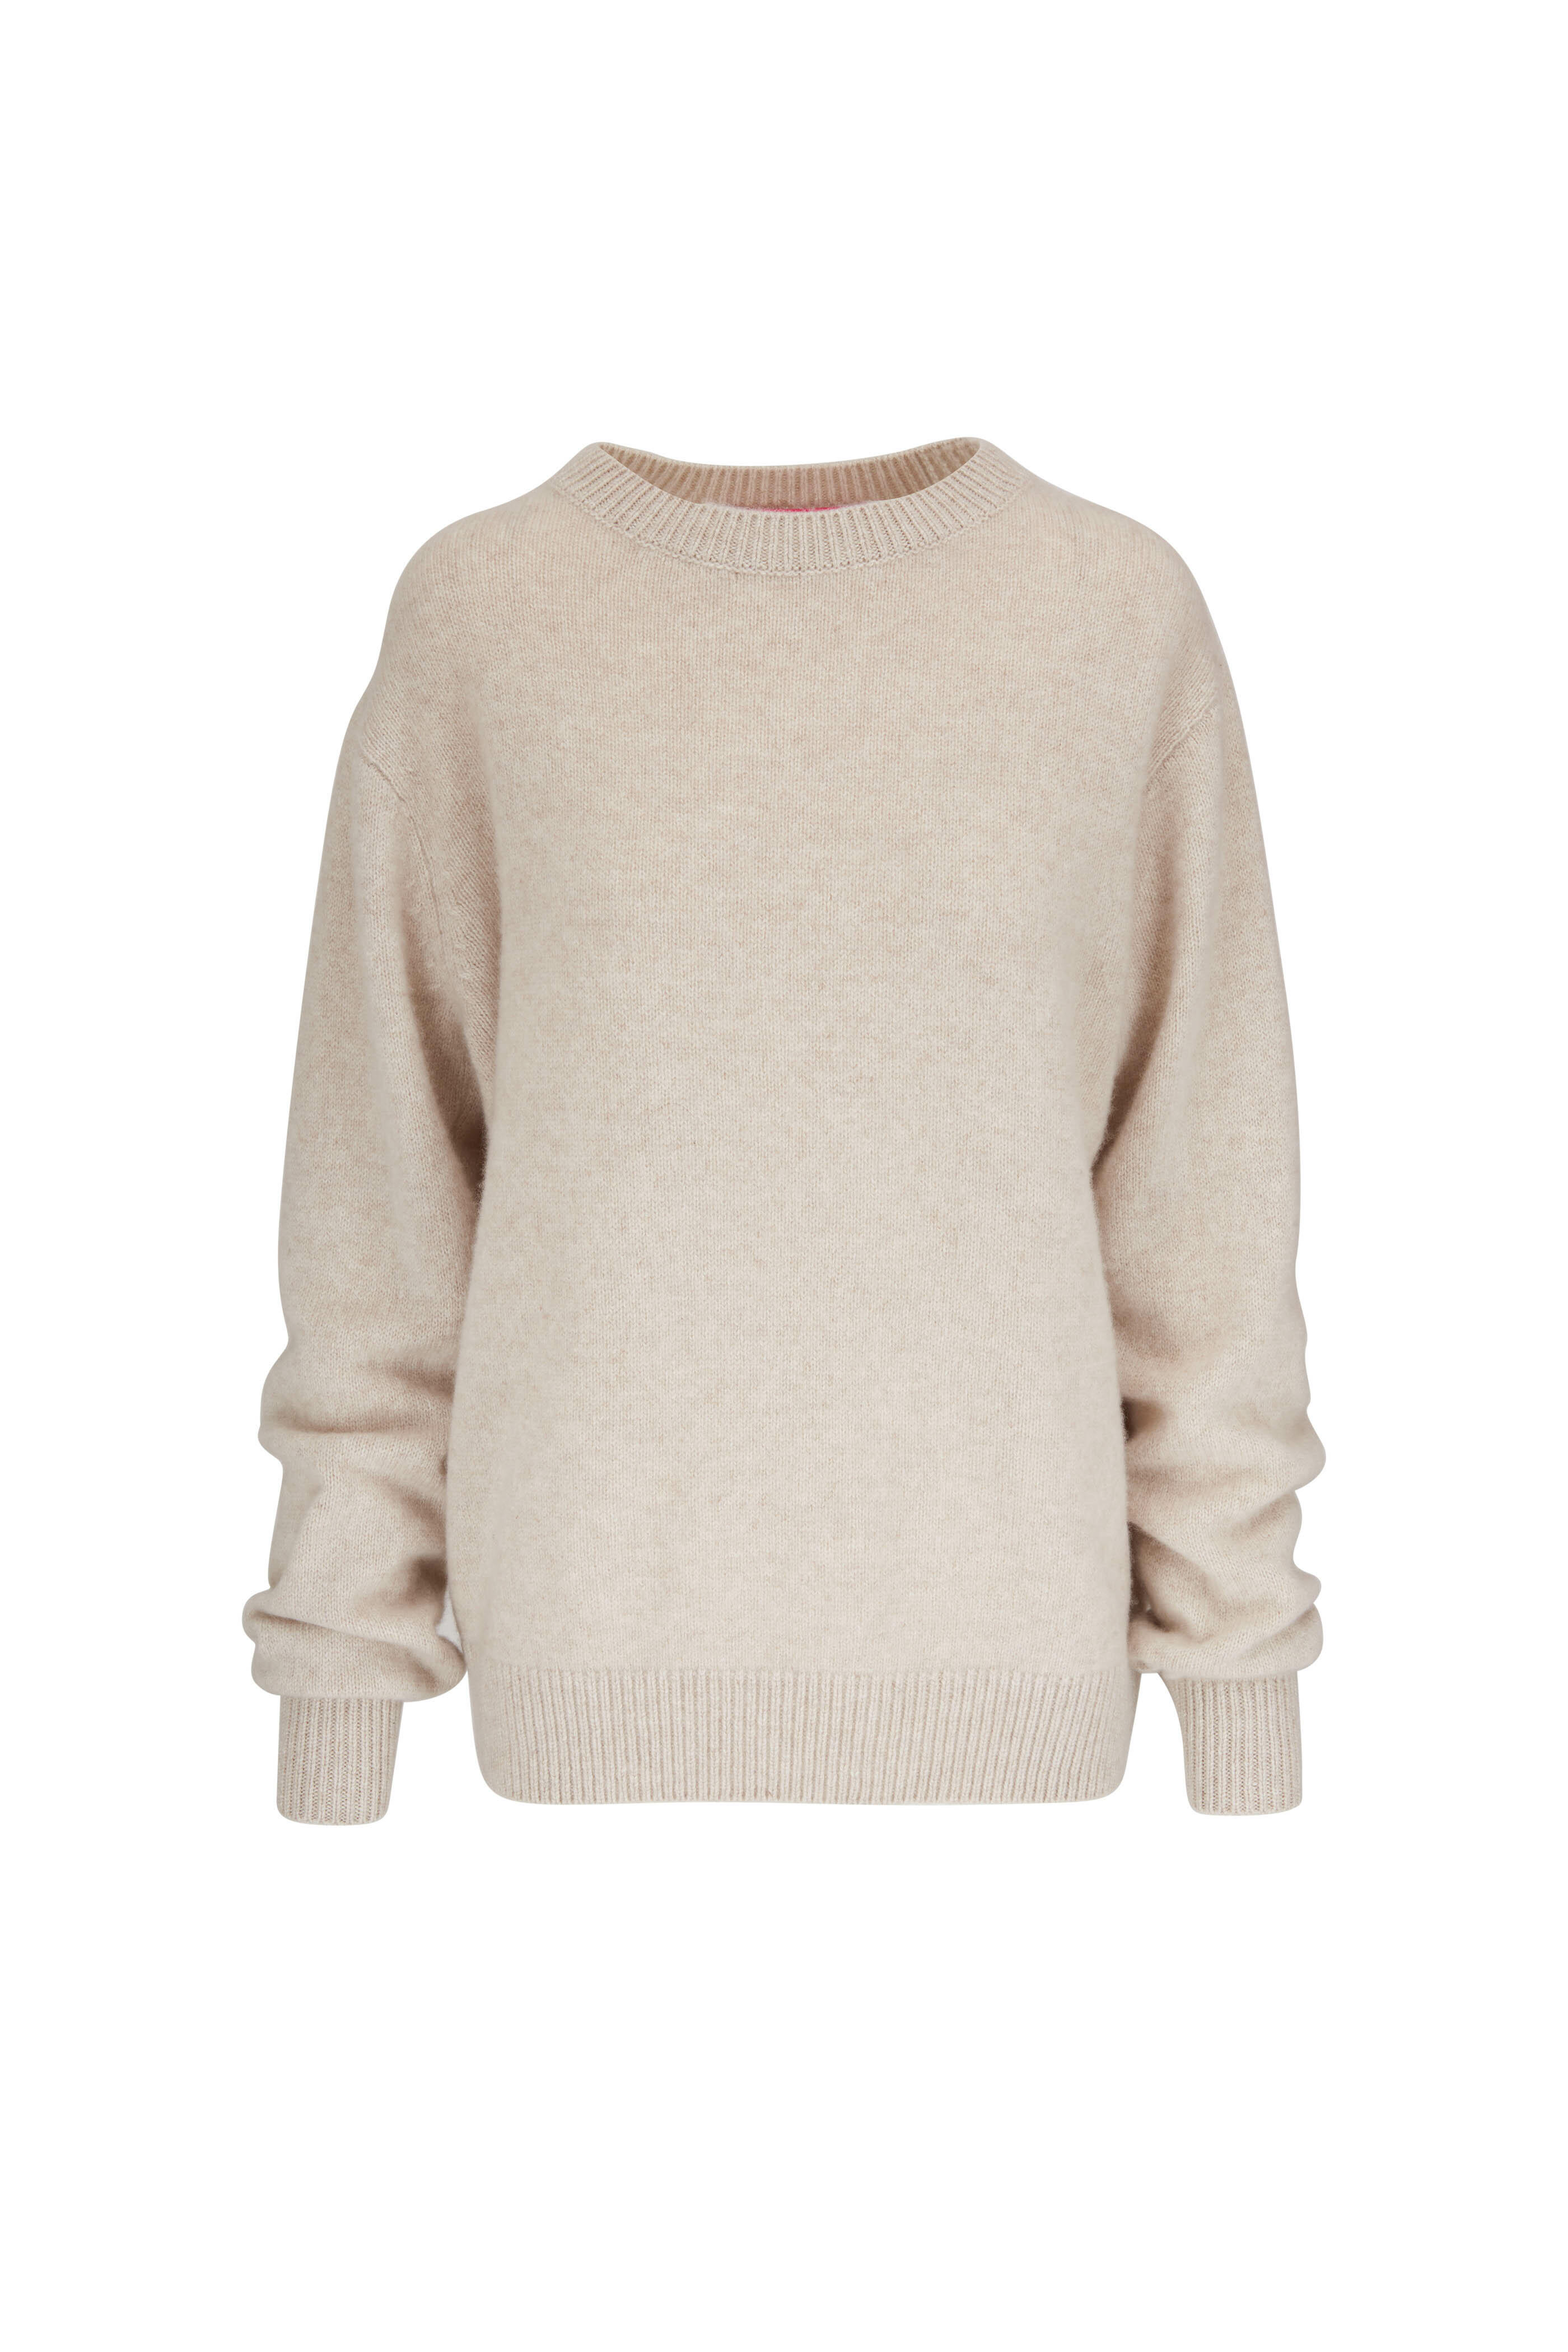 The Elder Statesman - Simple Crew Ivory Cashmere Sweater